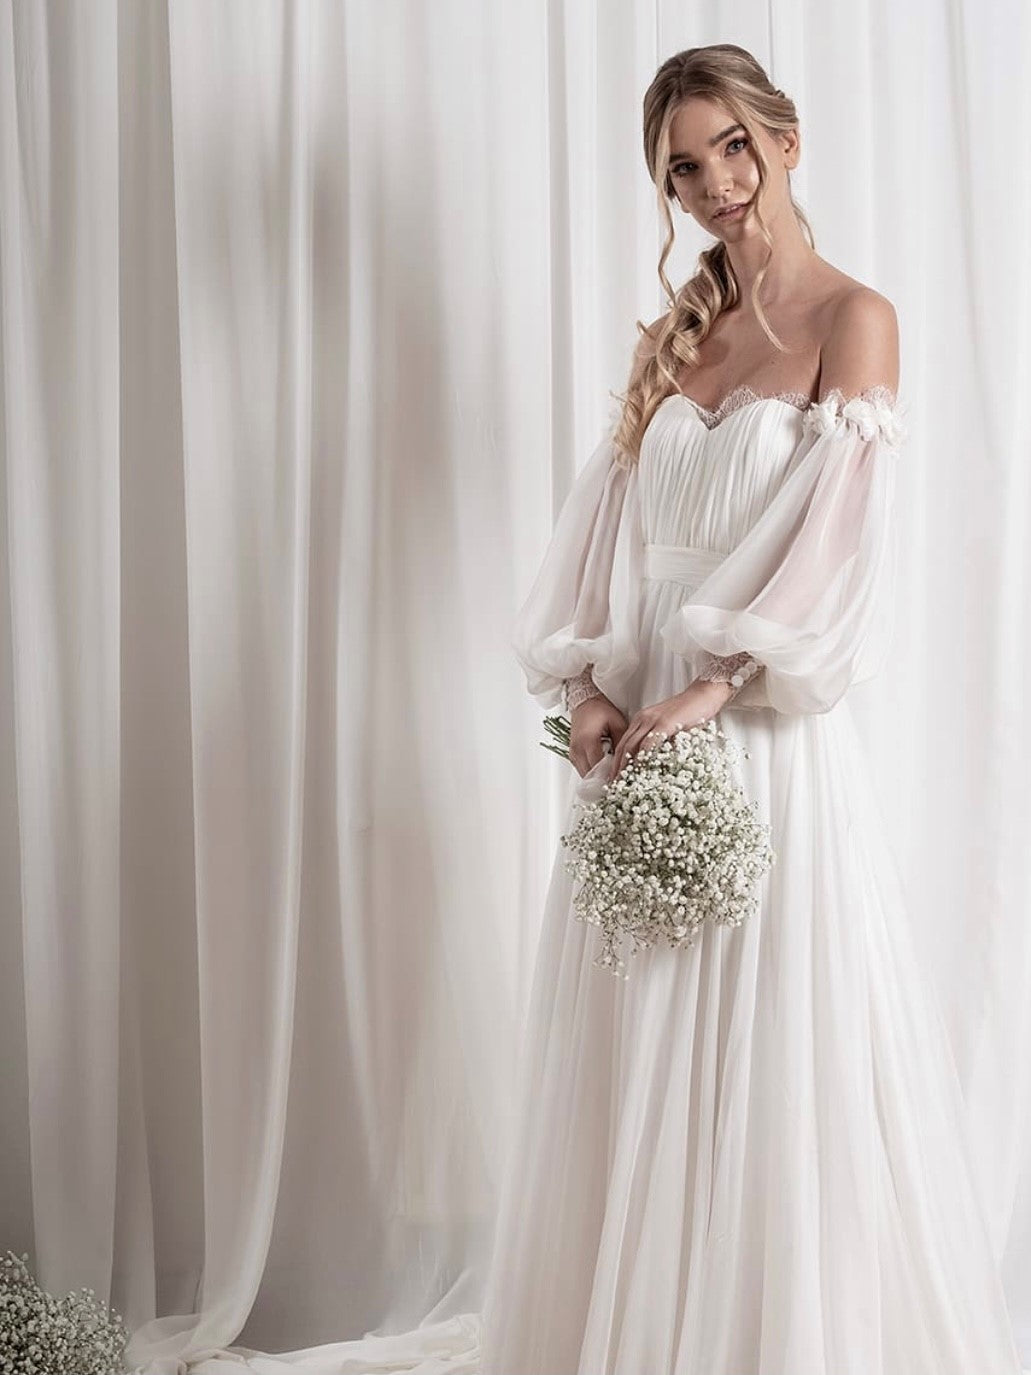 Types of wedding dress fabrics | new tess bridal fabrics